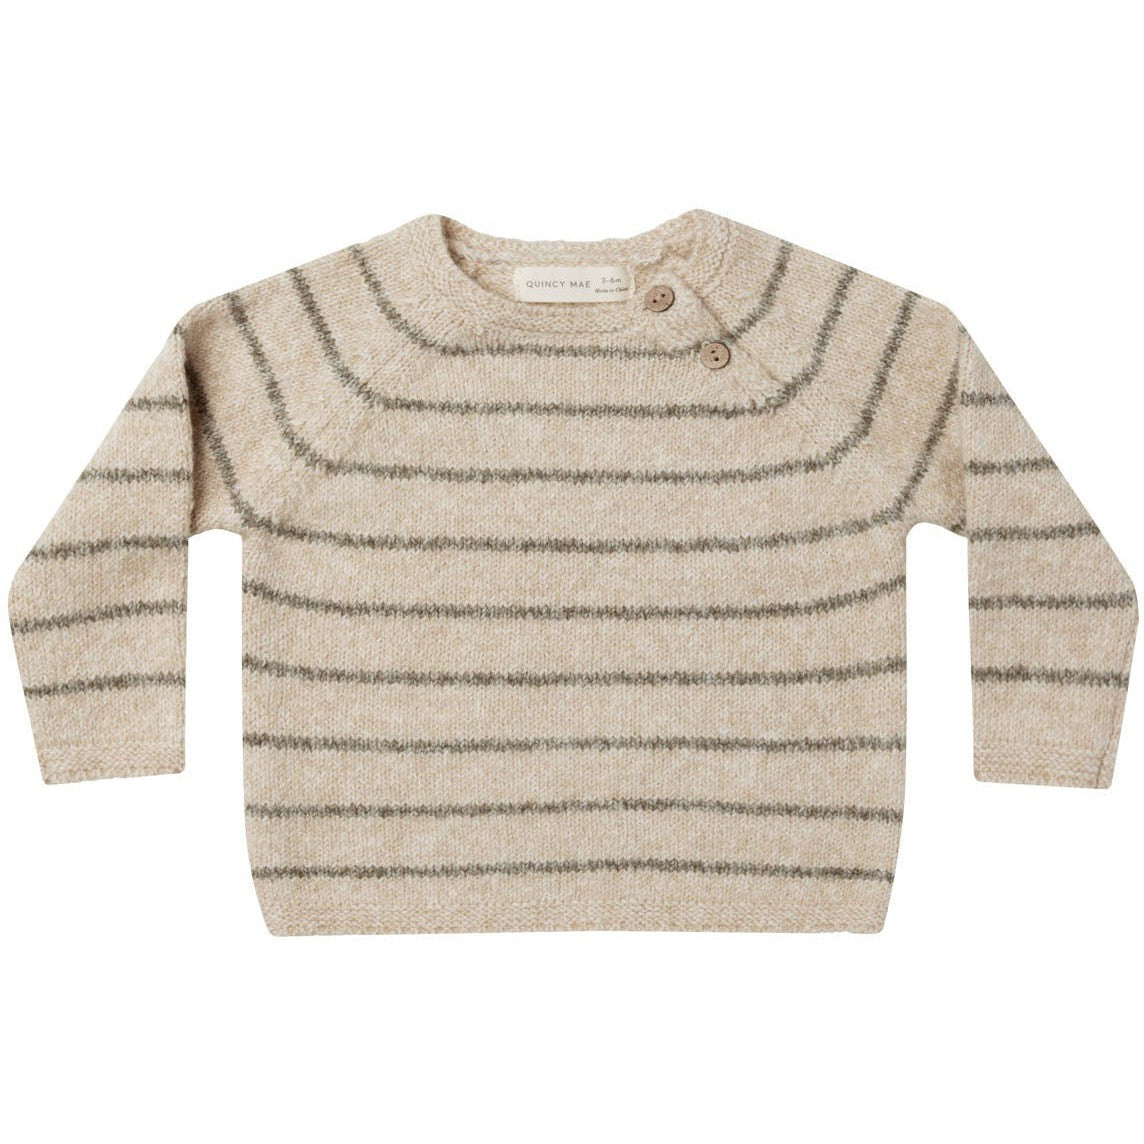 Ace Knit Sweater- Basil Stripe - HoneyBug 